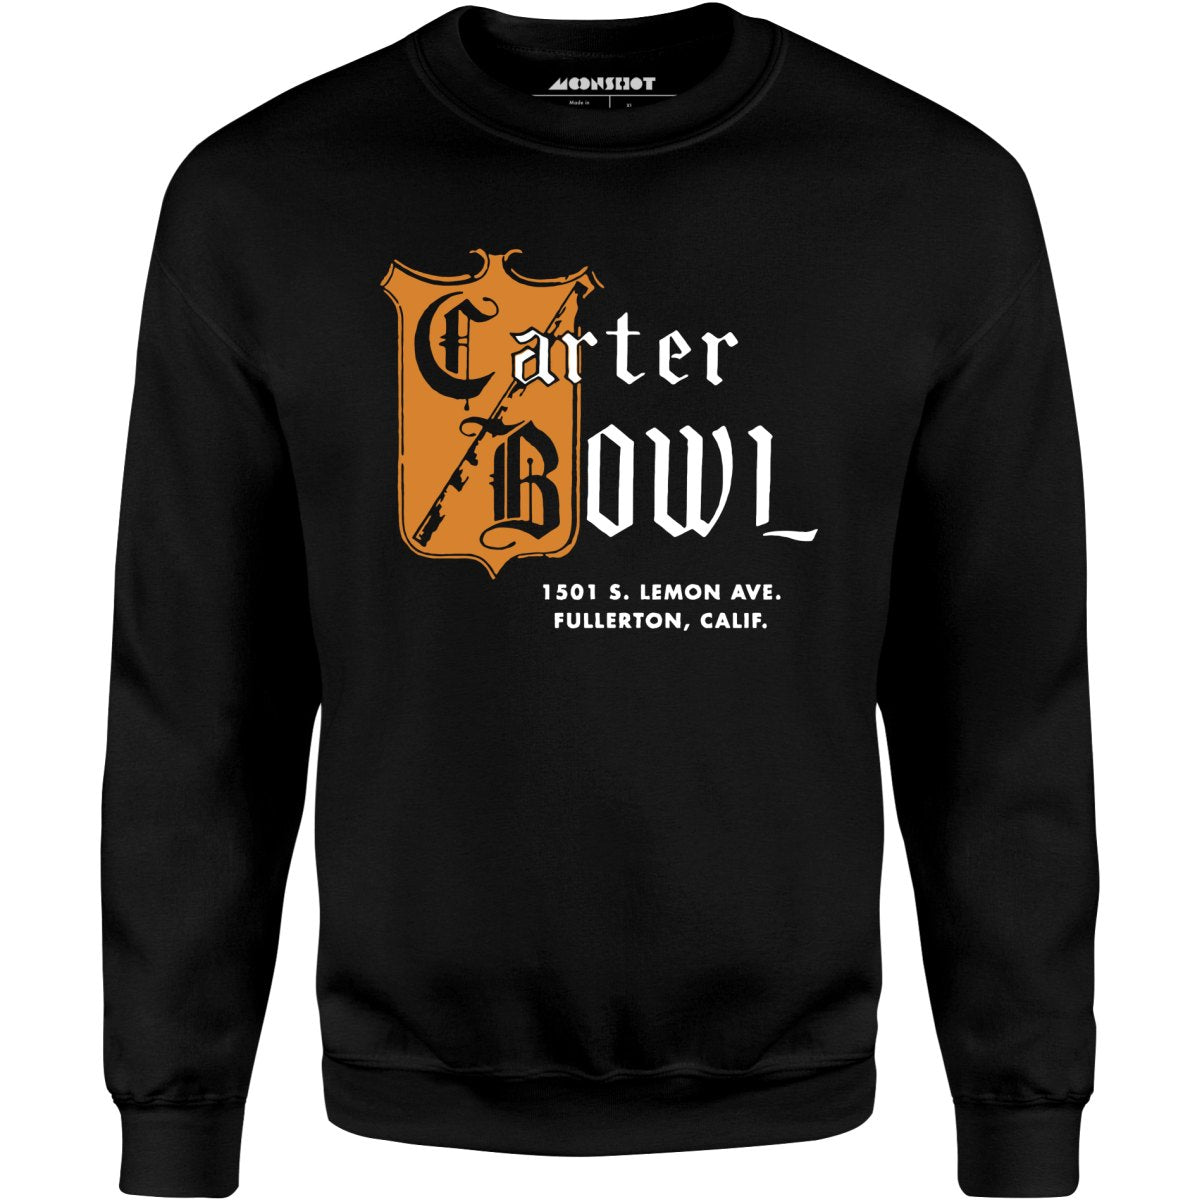 Carter Bowl - Fullerton, CA - Vintage Bowling Alley - Unisex Sweatshirt